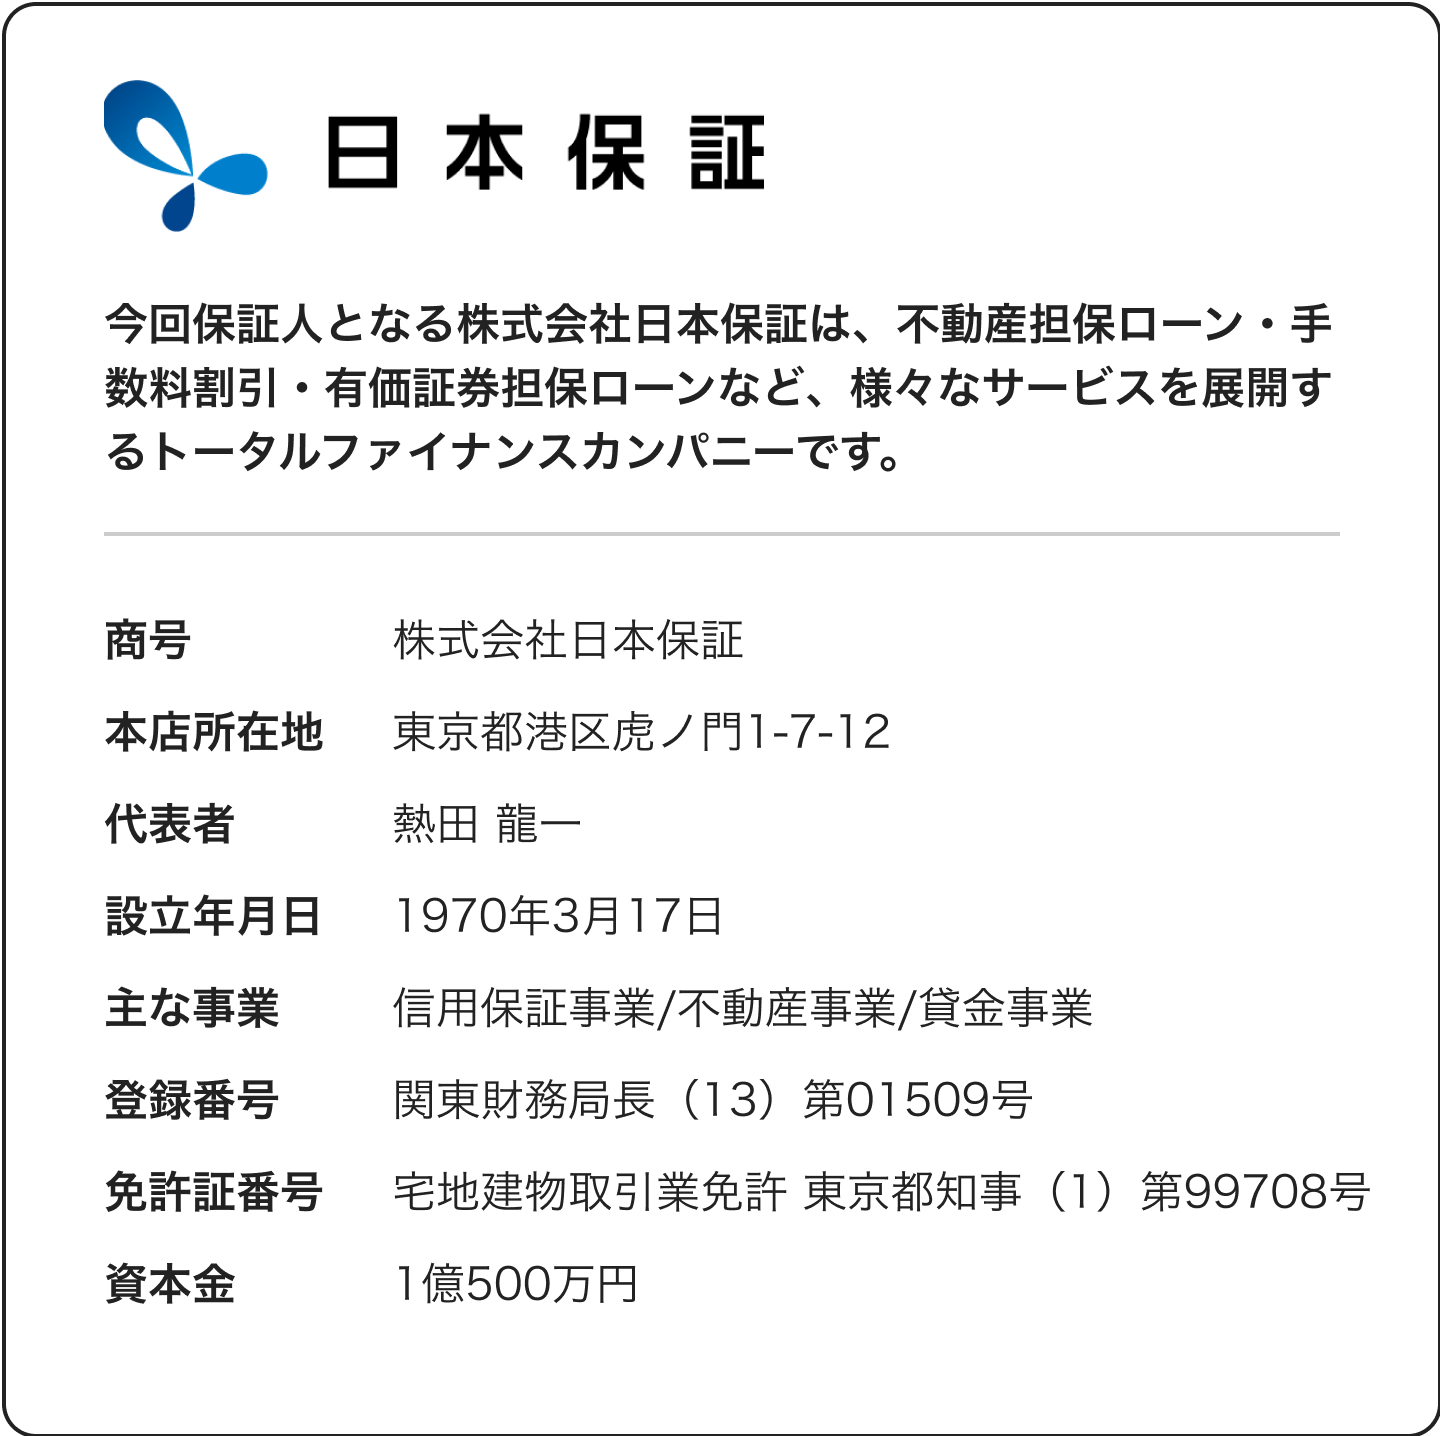 【CAMPFIRE Owners】の日本保証の保証付 ソーシャルレンディング案件